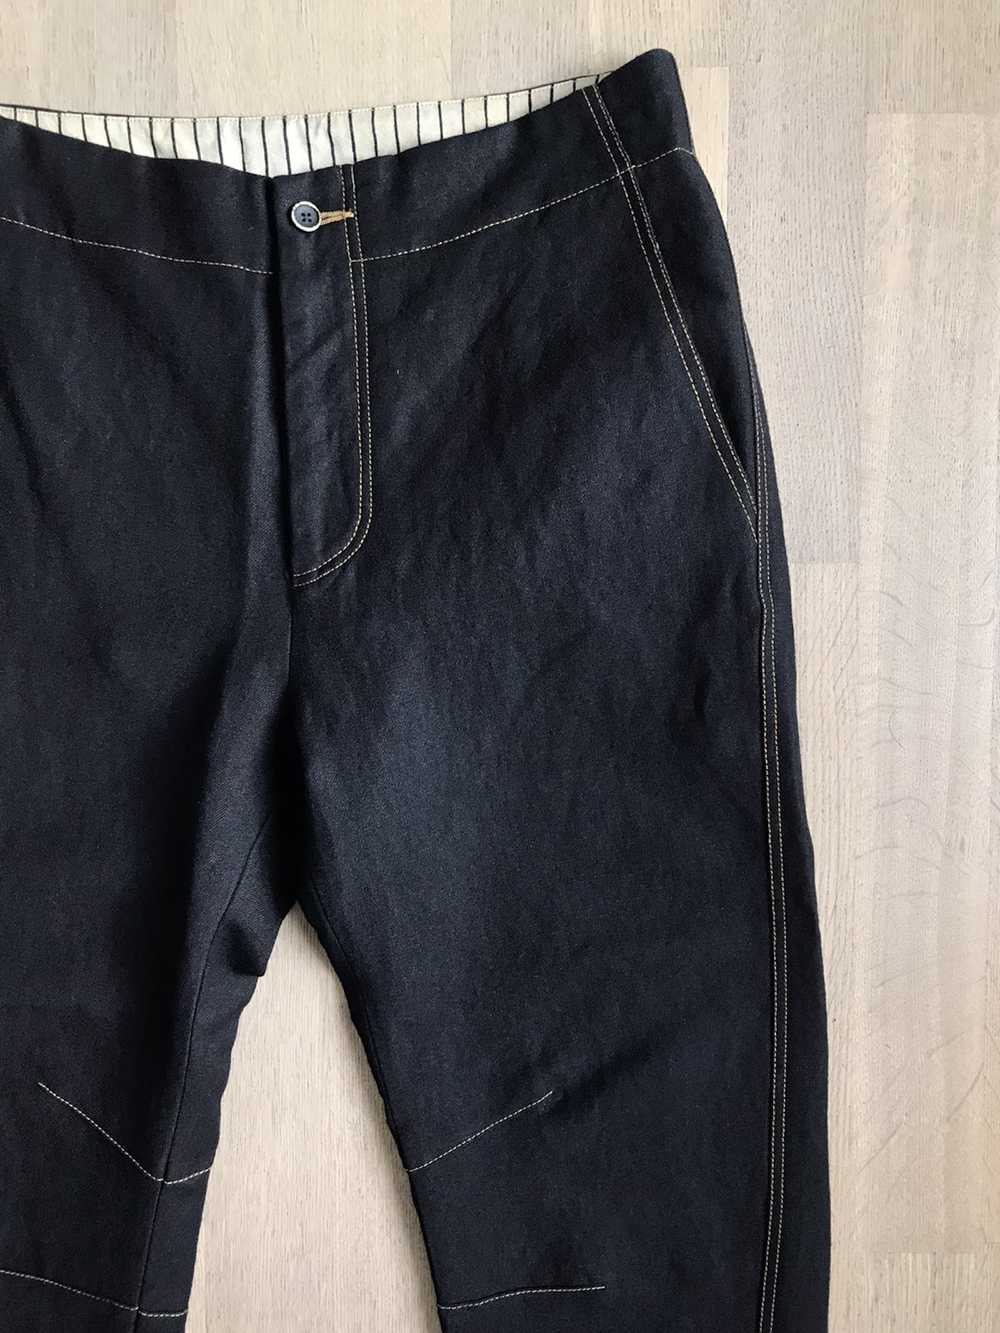 Uma Wang Contrast Stitch Tapered Pants - image 2